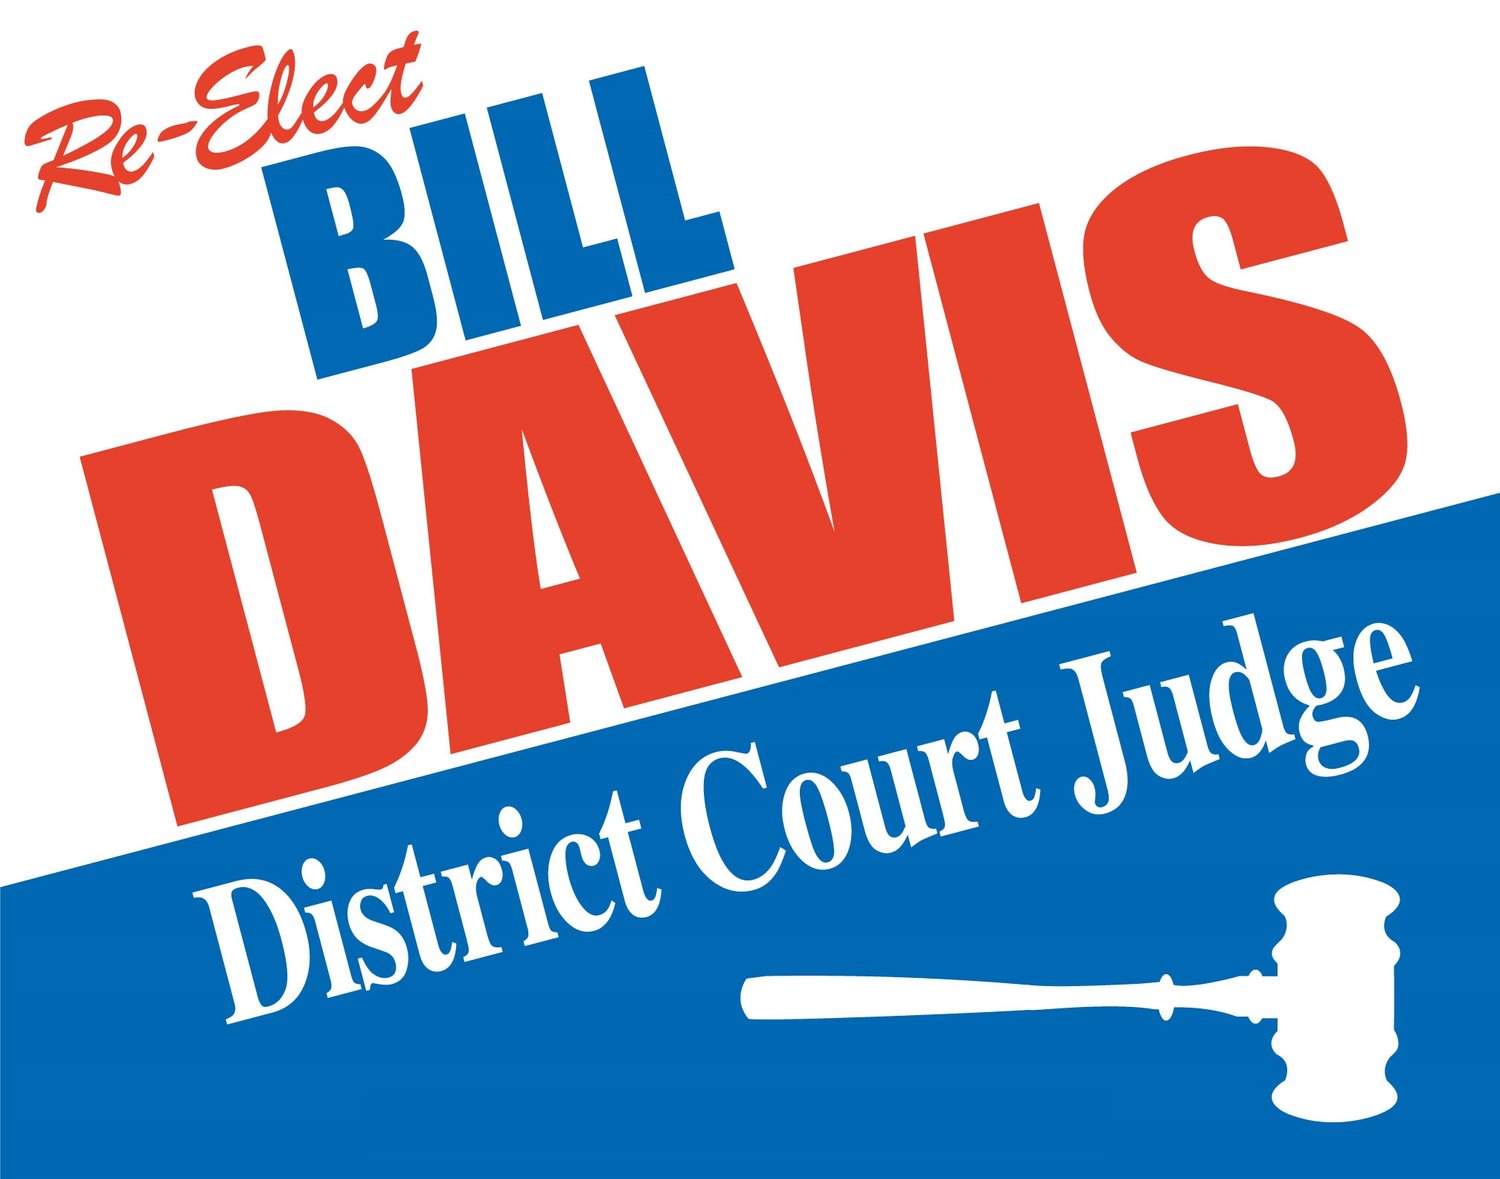 Re-Elect Bill Davis for District Court Judge